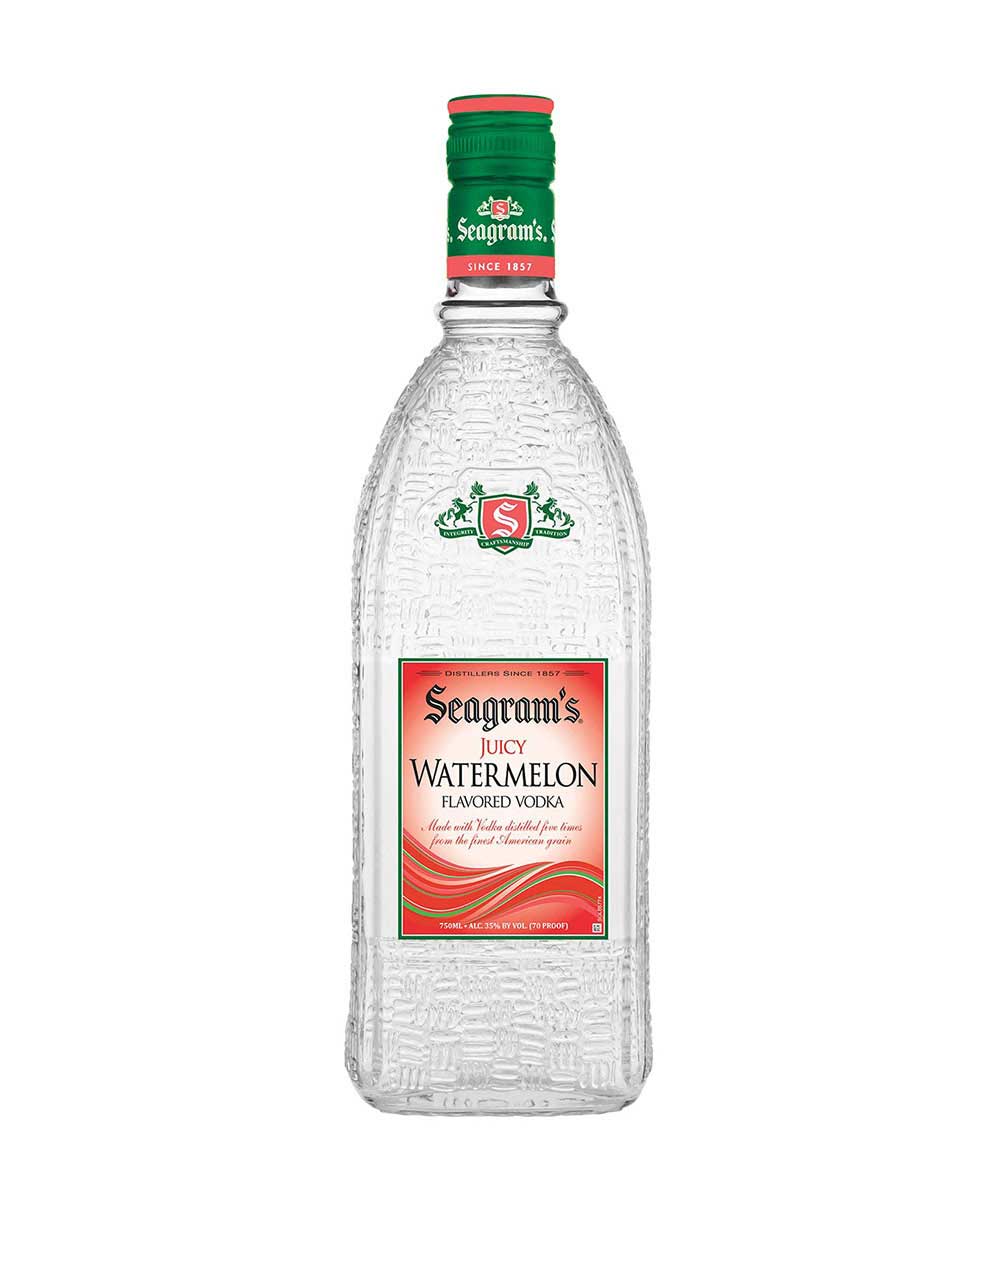 Seagrams Juicy Watermelon Flavored Vodka